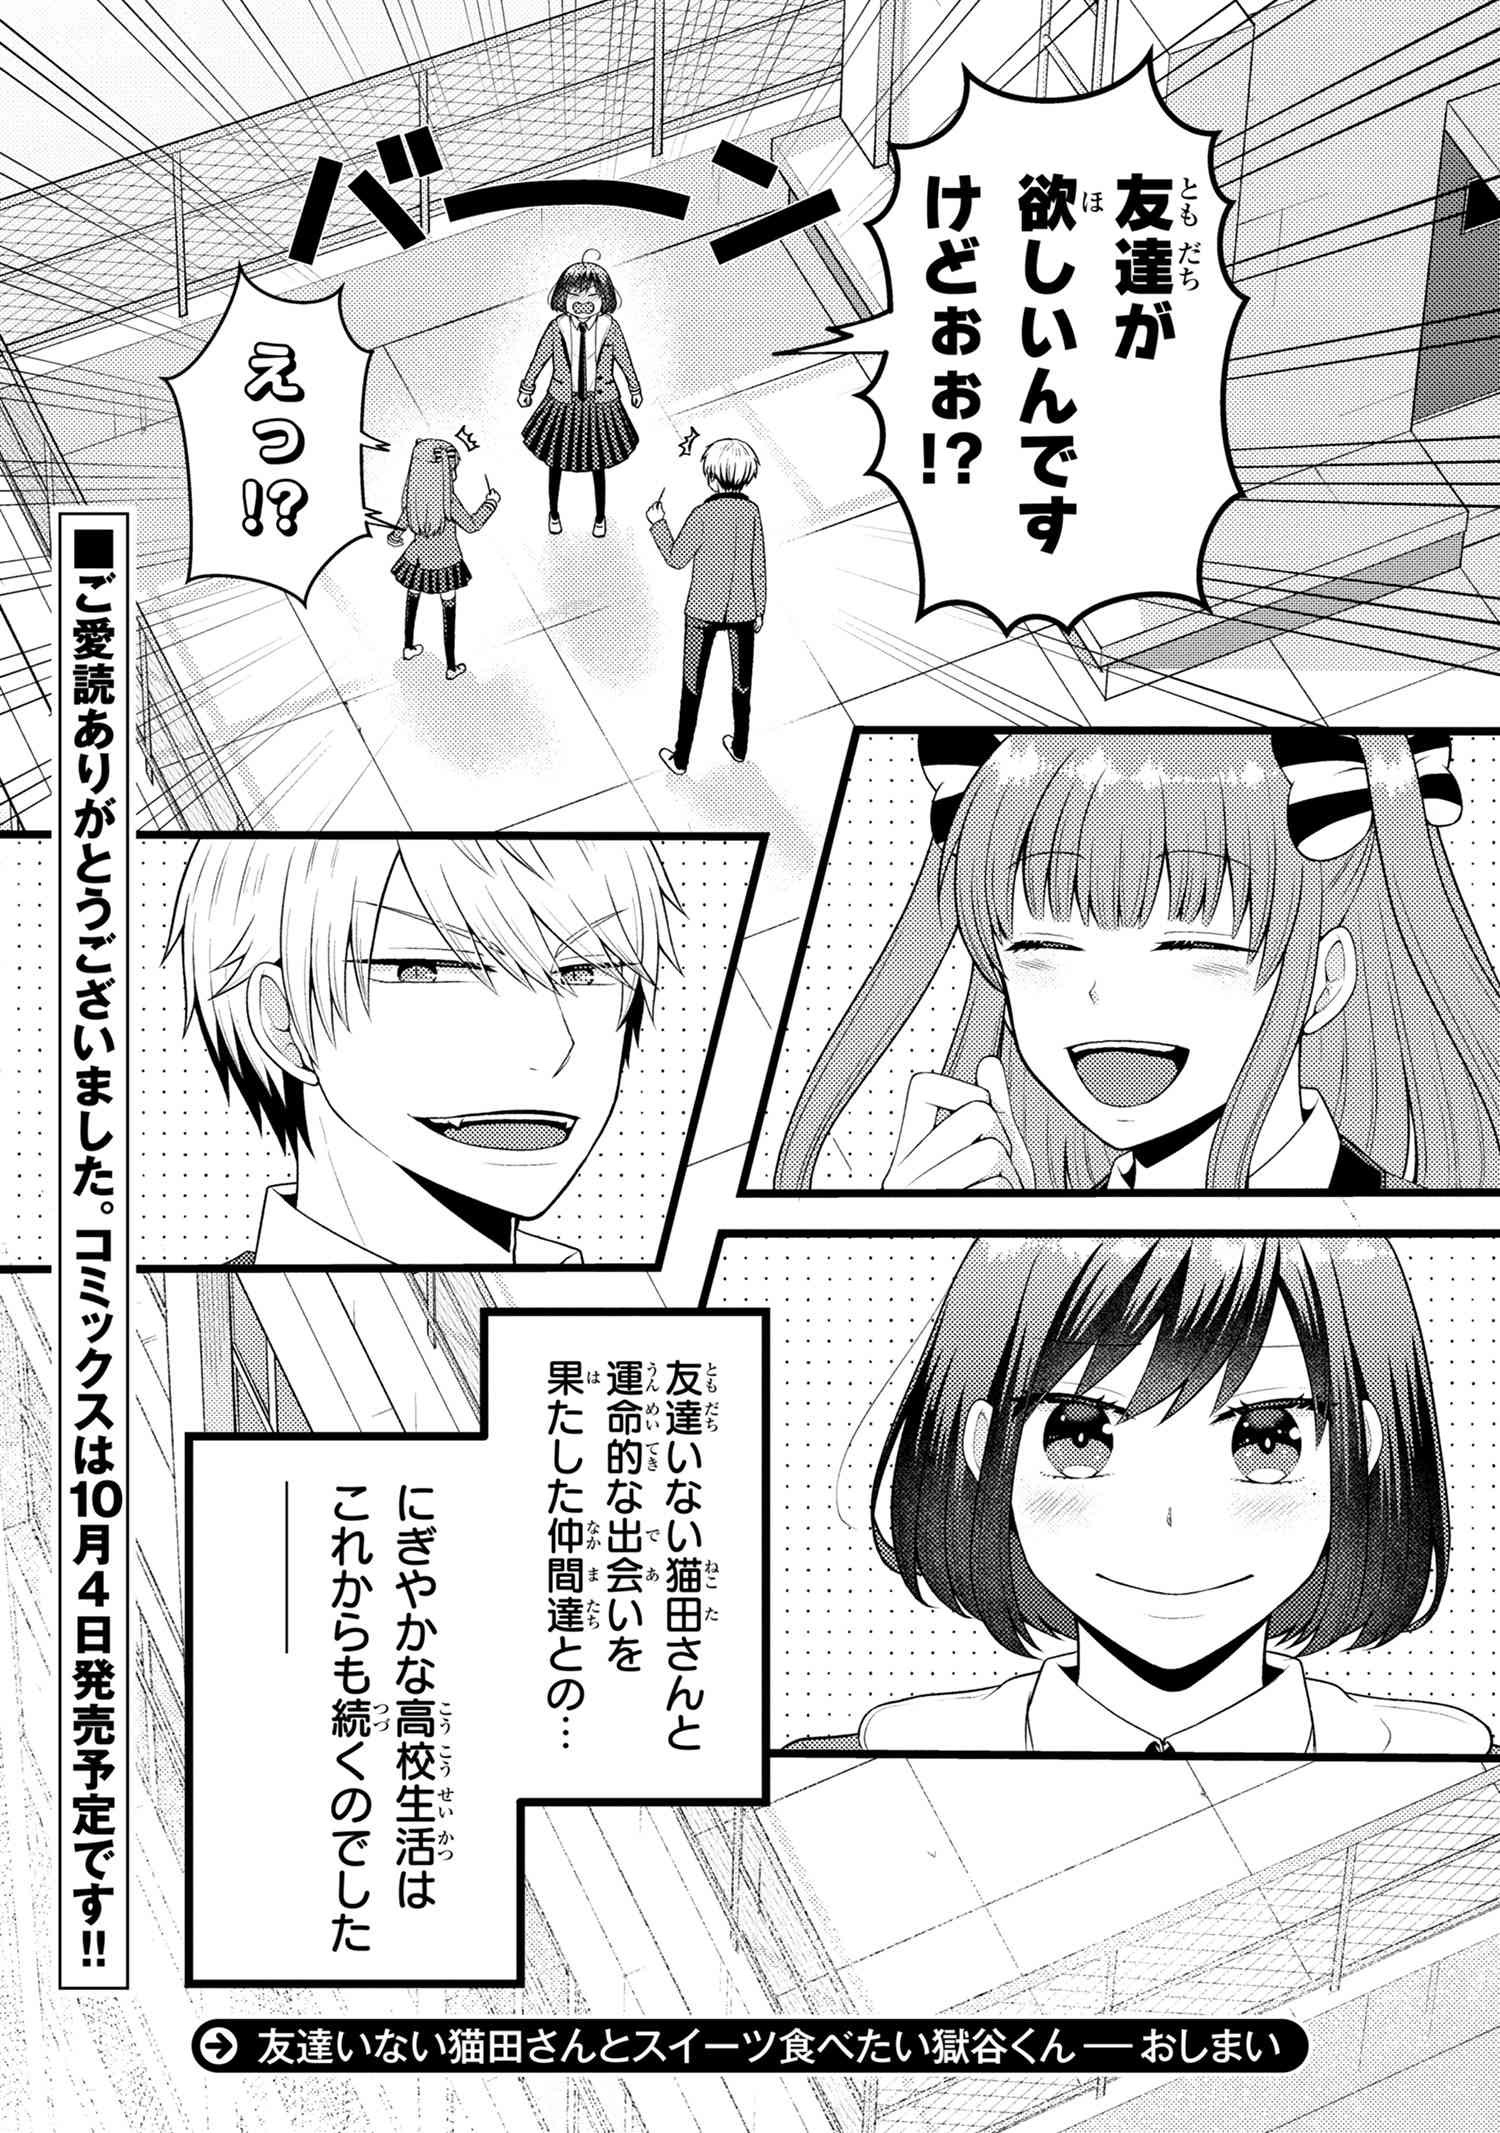 Tomodachi Inai Nekota-san to Sweets Tabetai Gokutani-kun - Chapter 10-3 - Page 8